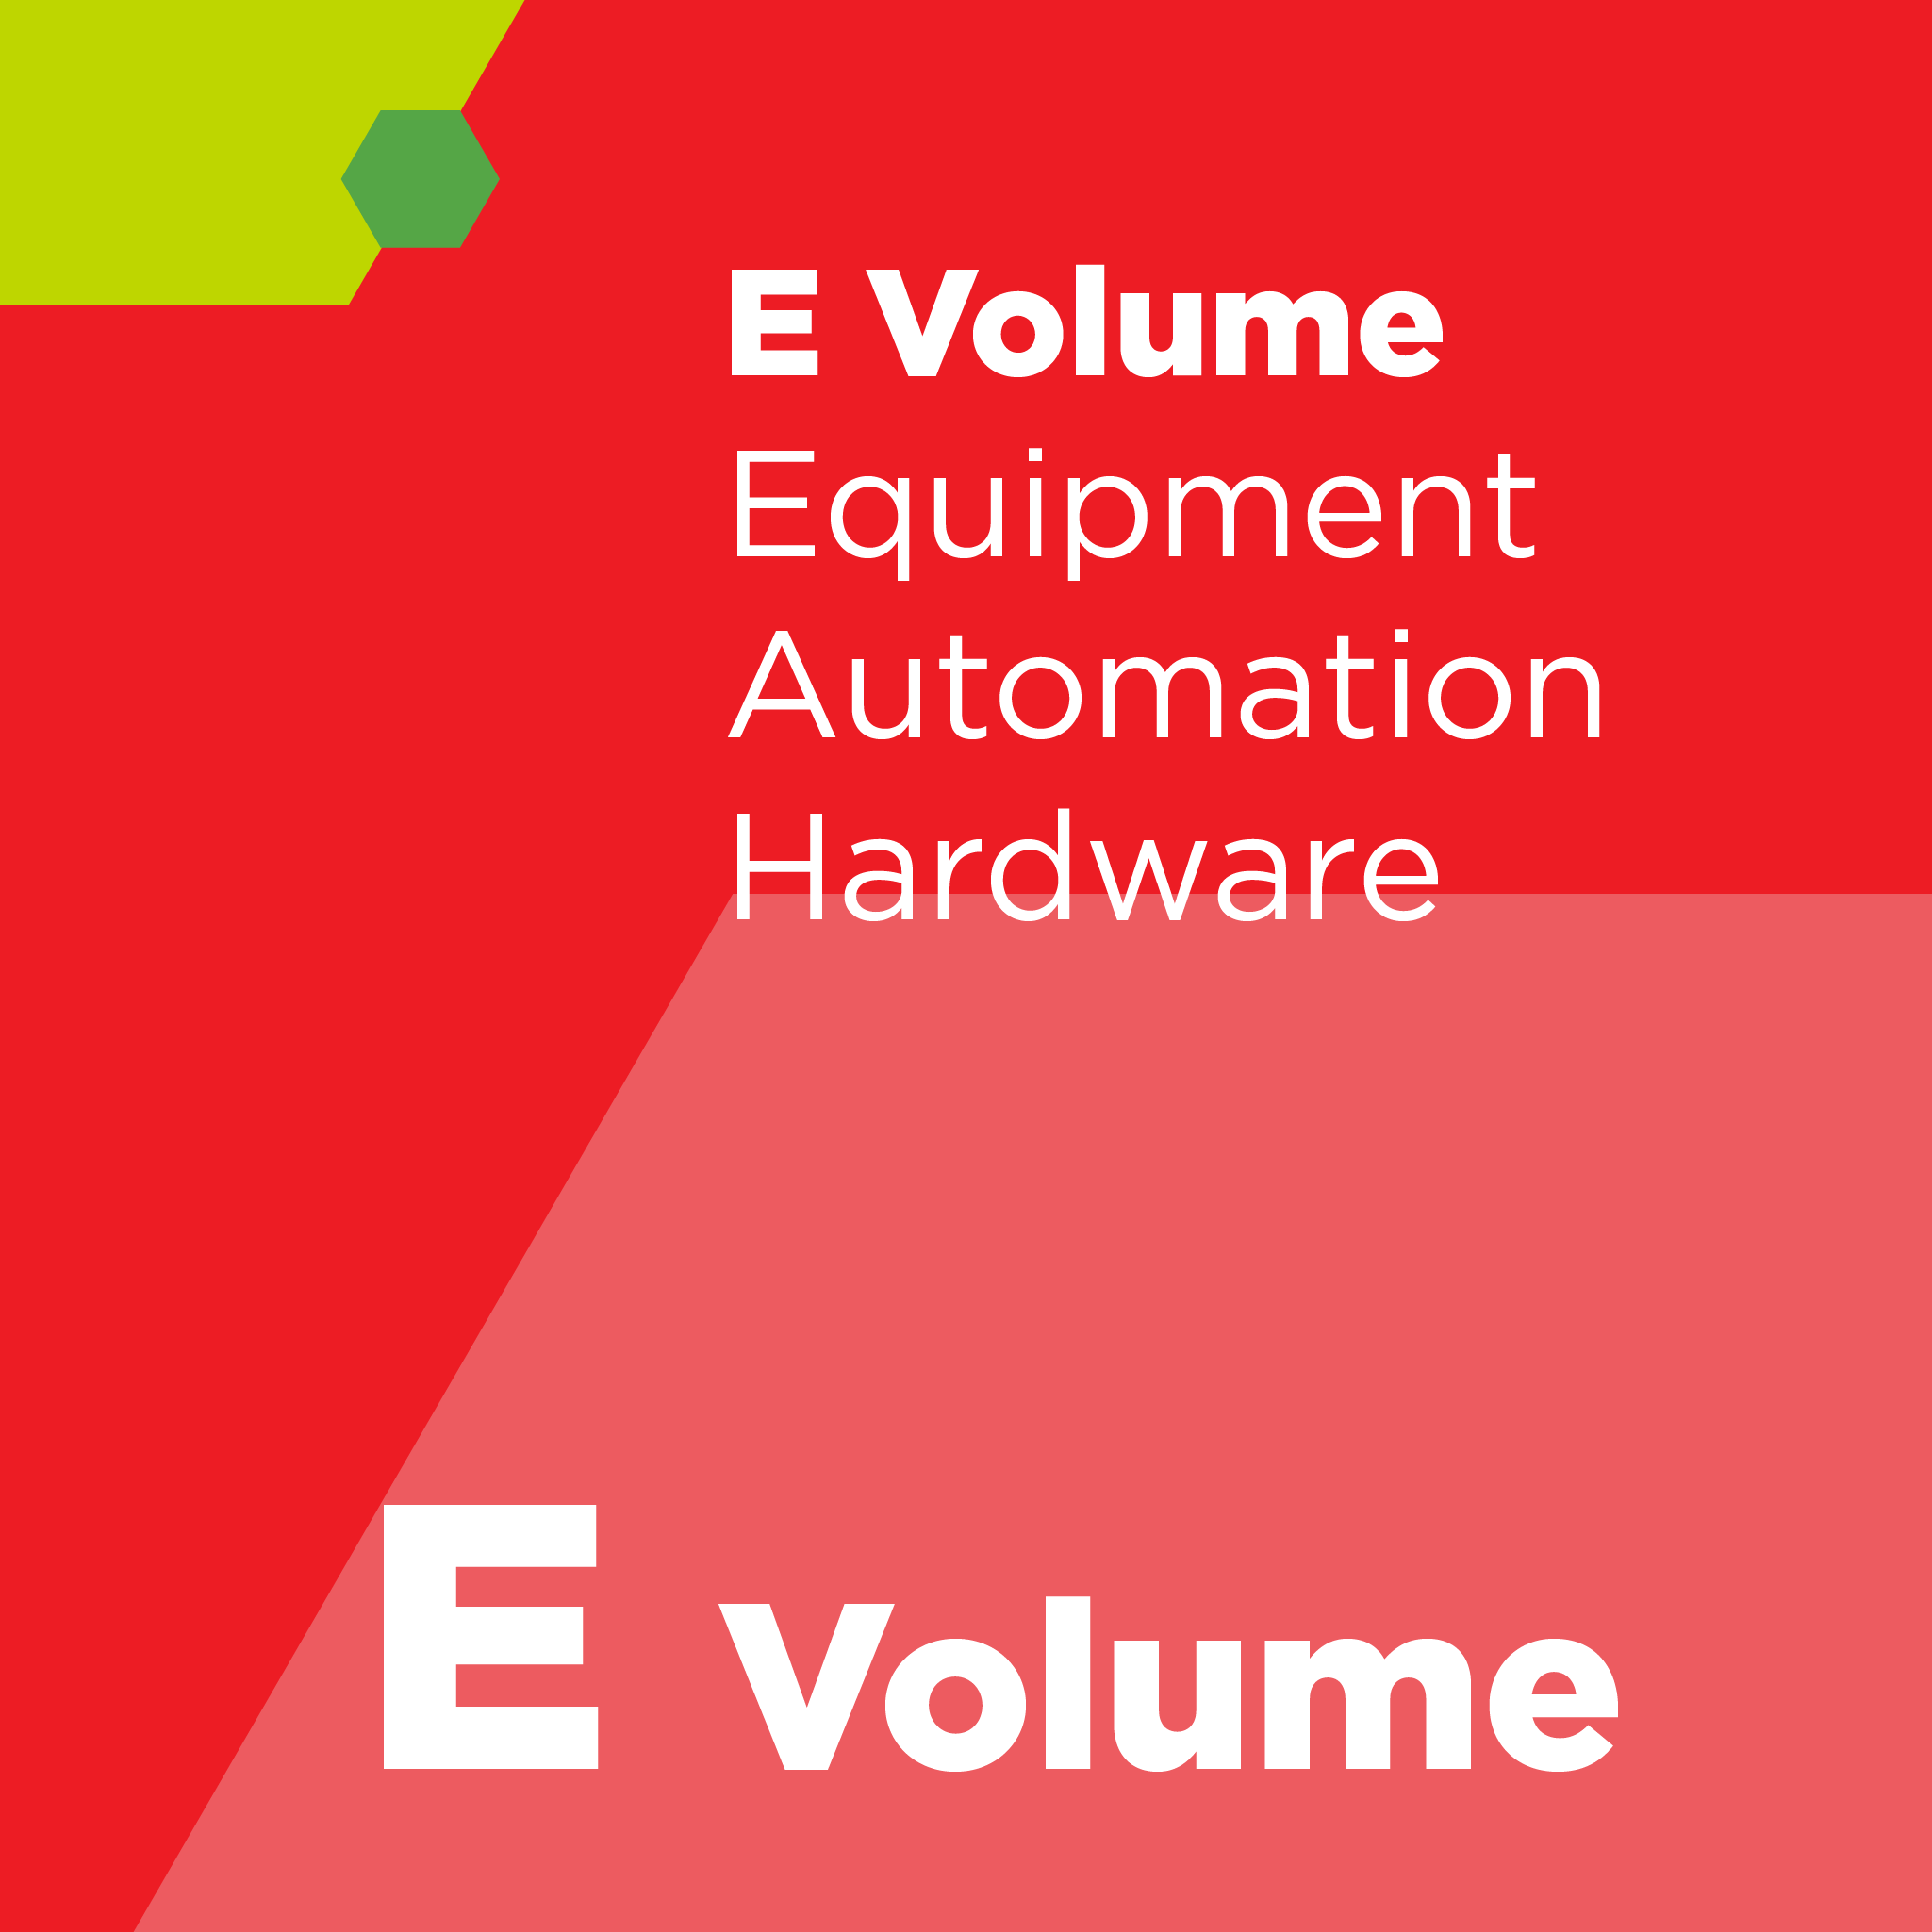 E01501 - SEMI E15.1 - Specification for 300 mm Tool Load Port